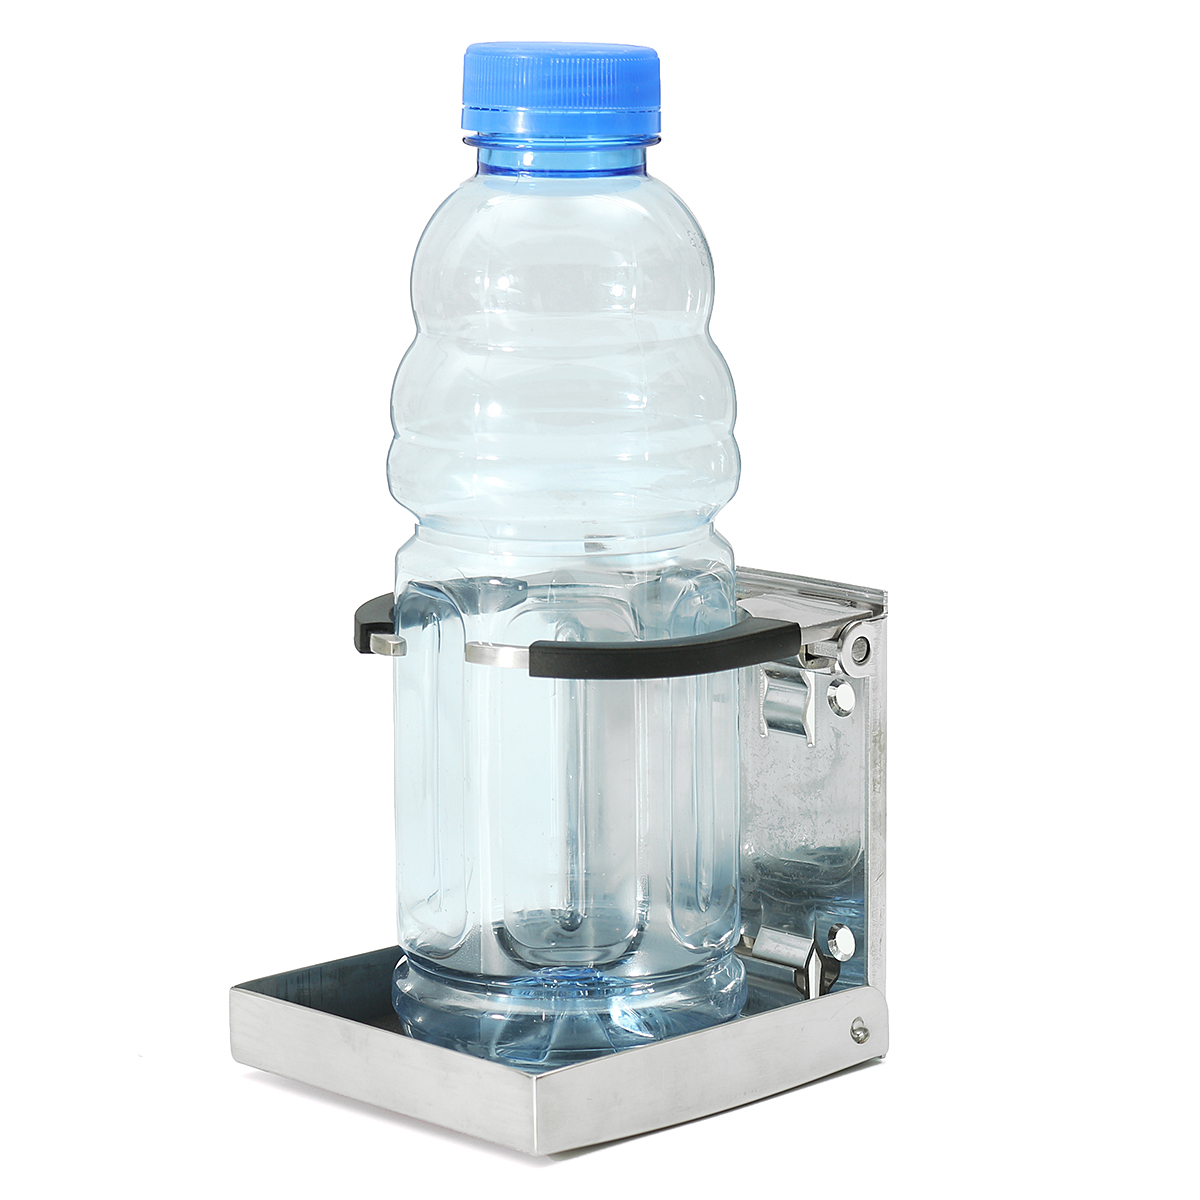 Stainless-Steel-Adjustable-Folding-Drink-Cup-Holder-Water-Bottle-Holder-for-MarineBoatCarCaravan-1301923-5